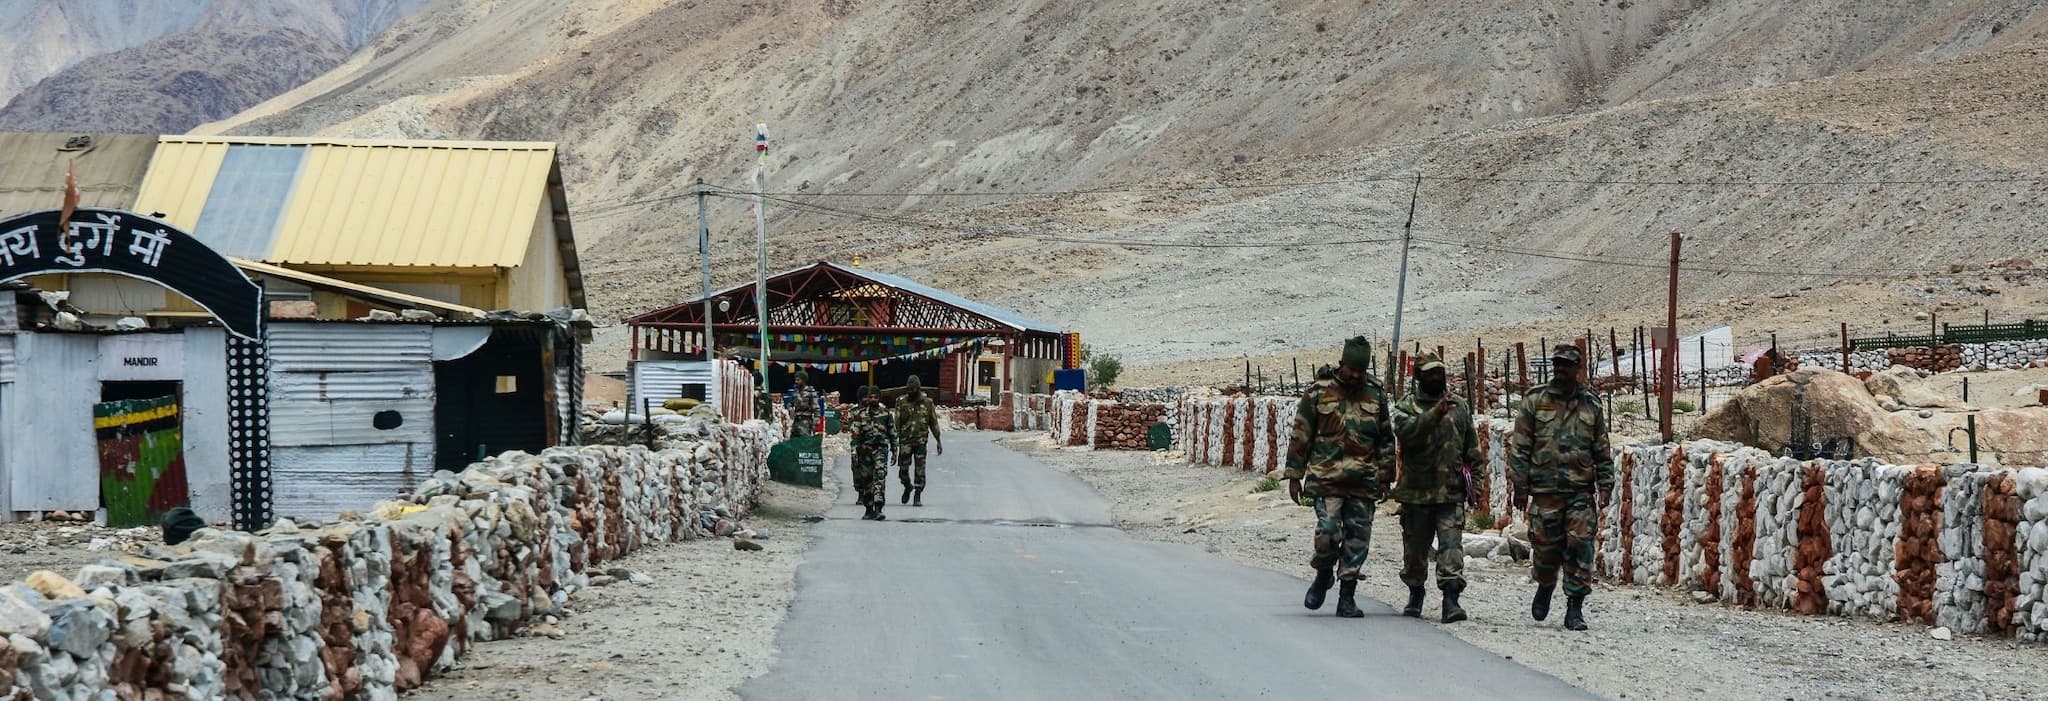 Tourist Spots Near Military Base Camps